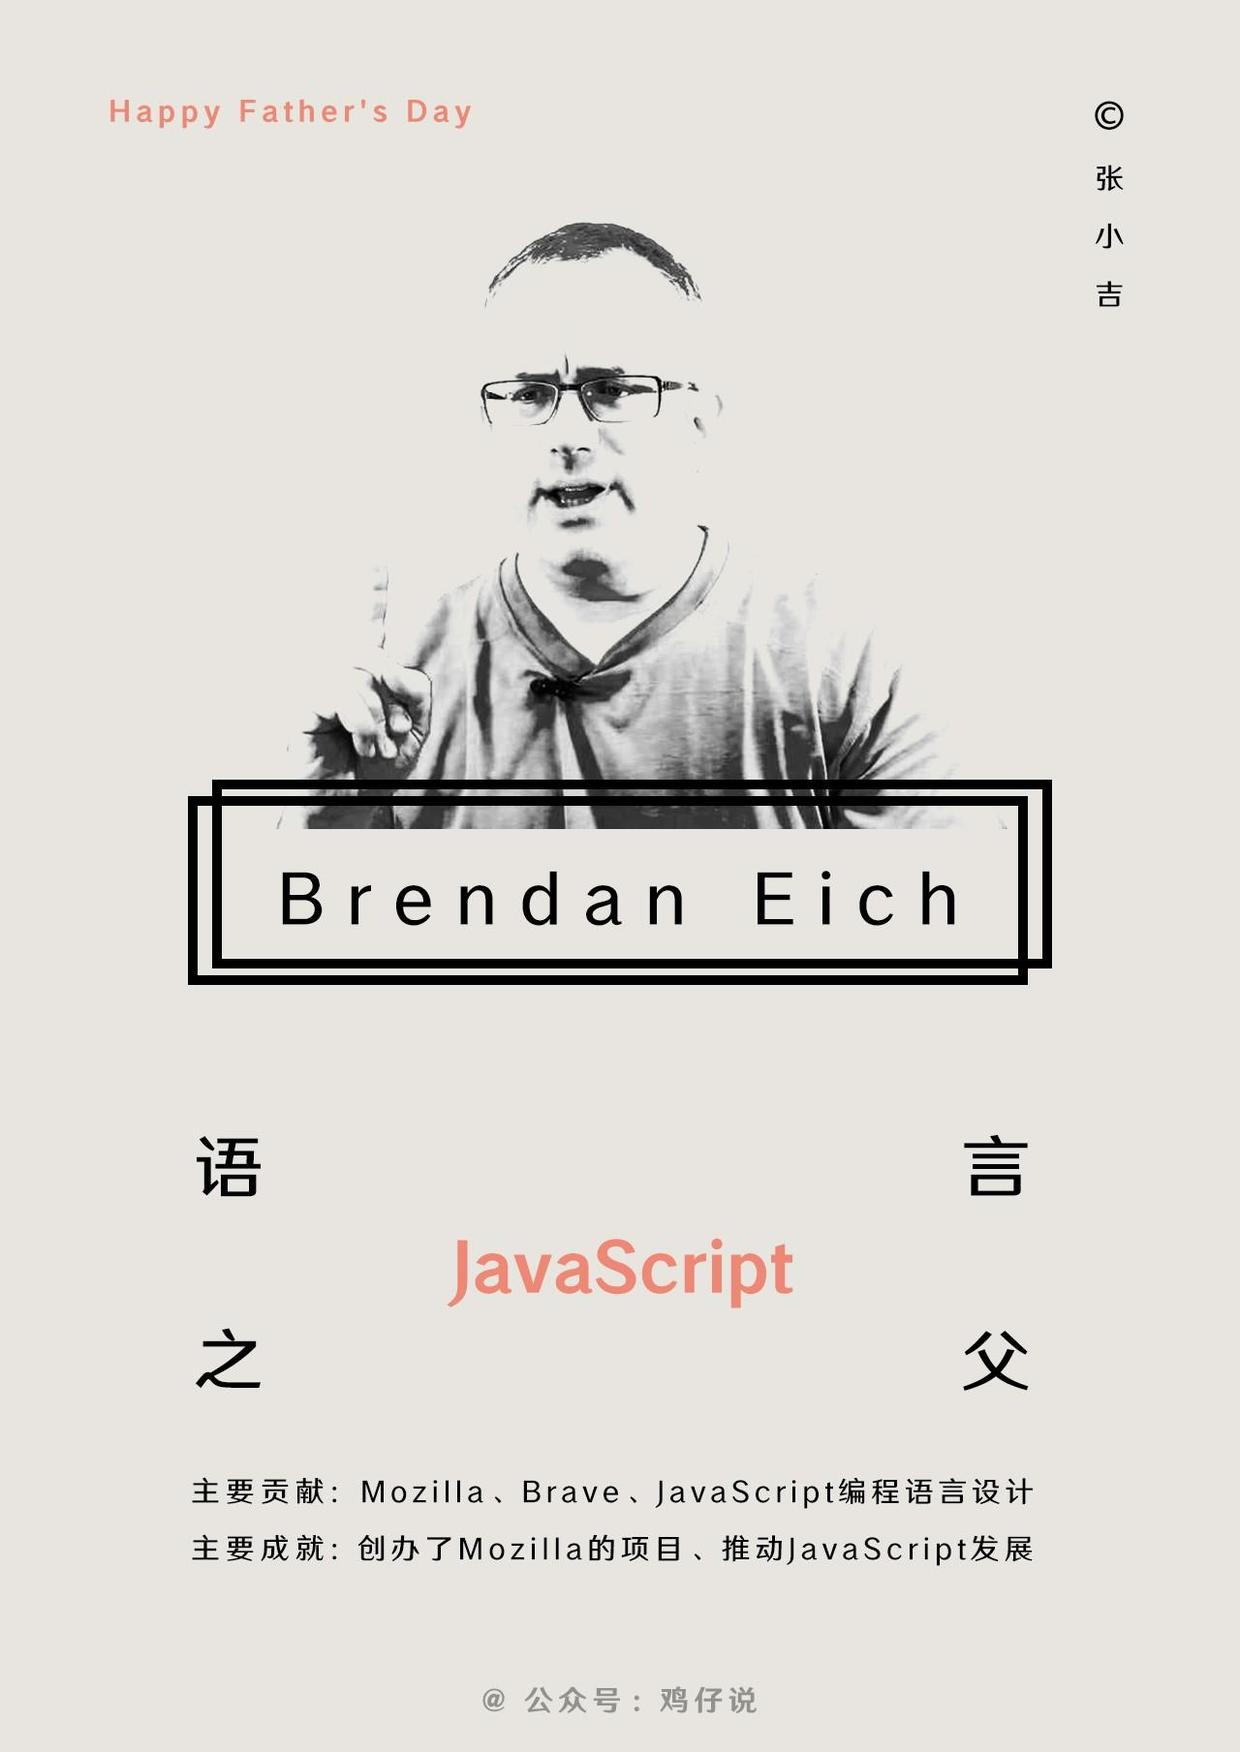 JavaScript 编程语言之父